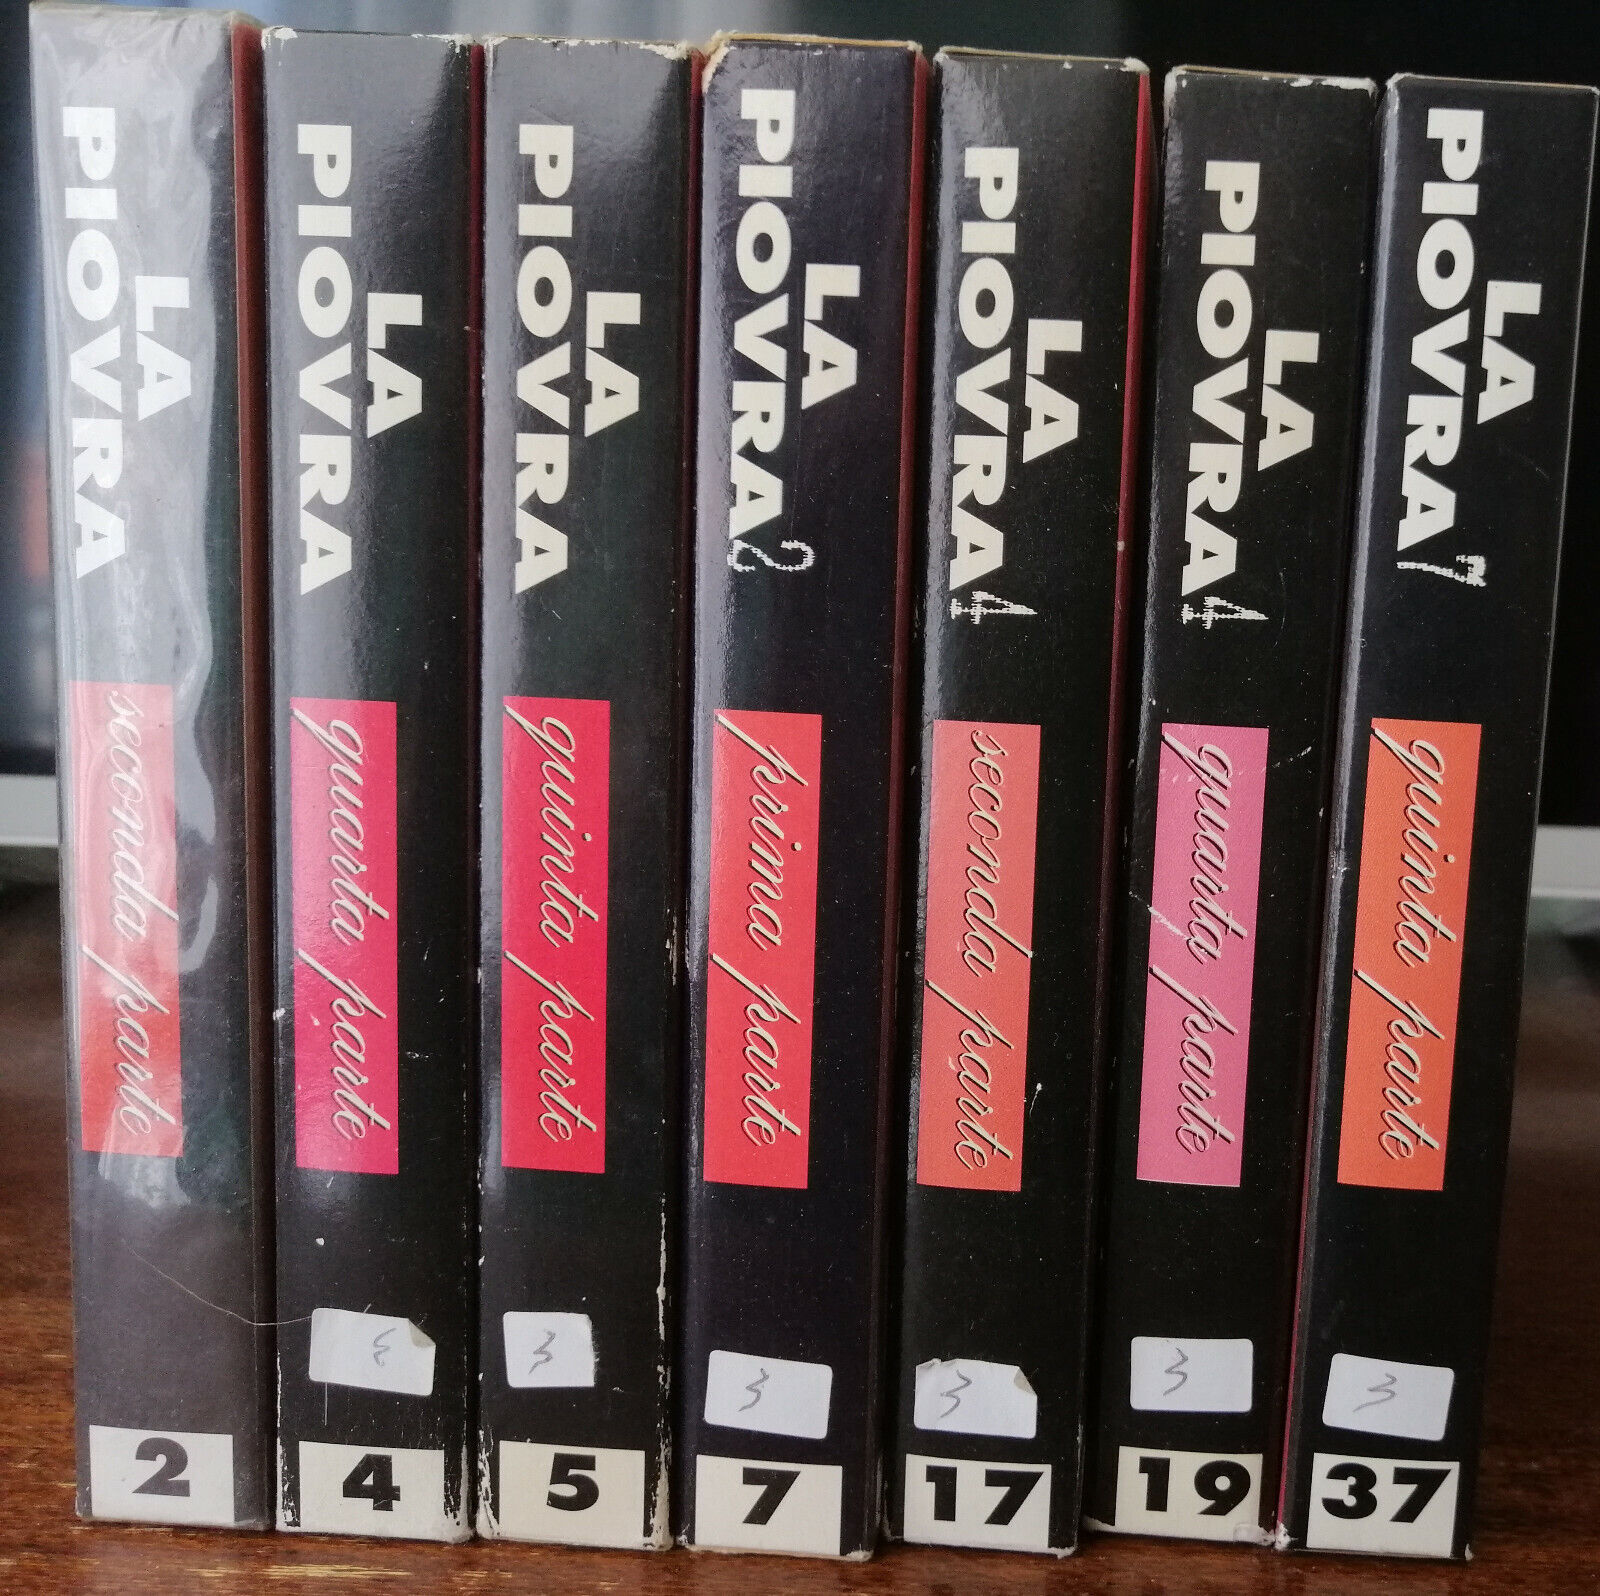 La Piovra (6 vhs) - VideoRai, 1995 - VHS - A vhs usato